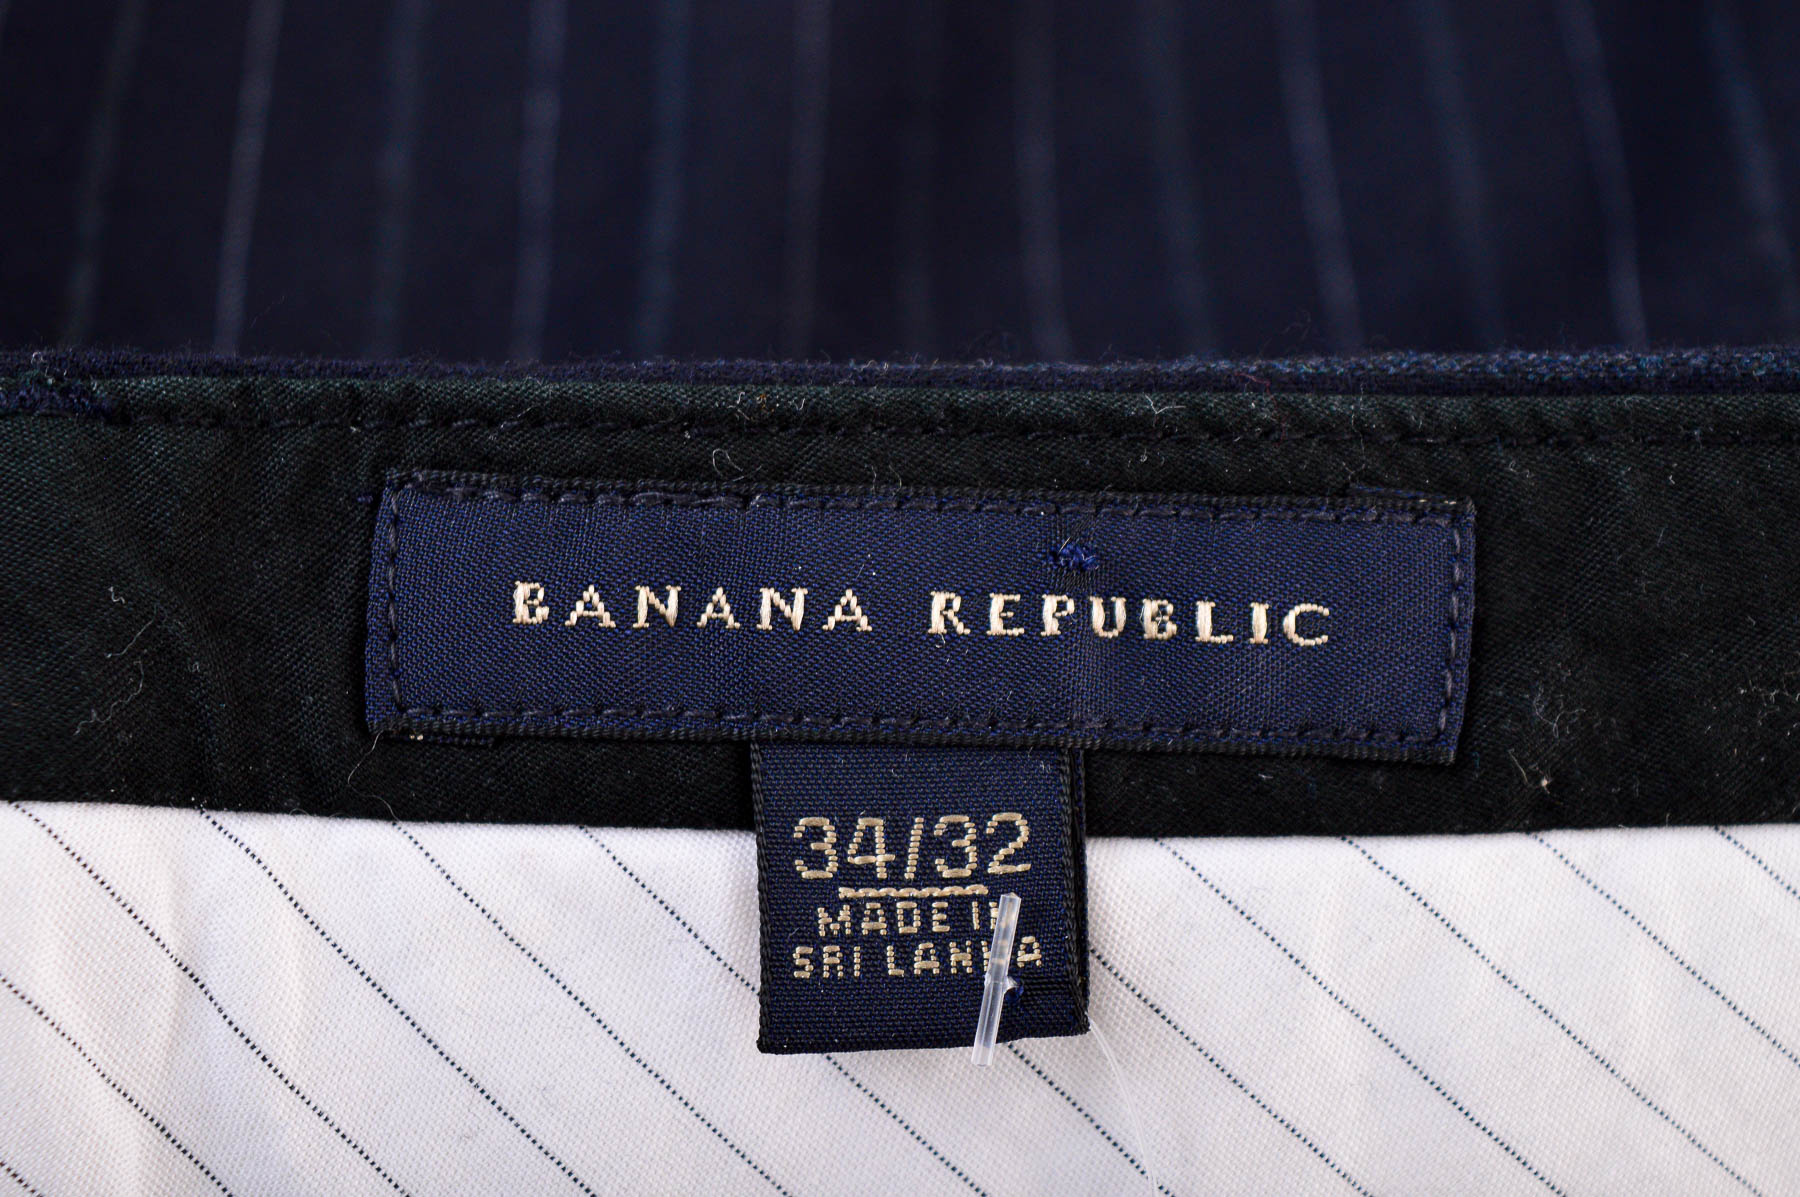 Men's trousers - BANANA REPUBLIC - 2